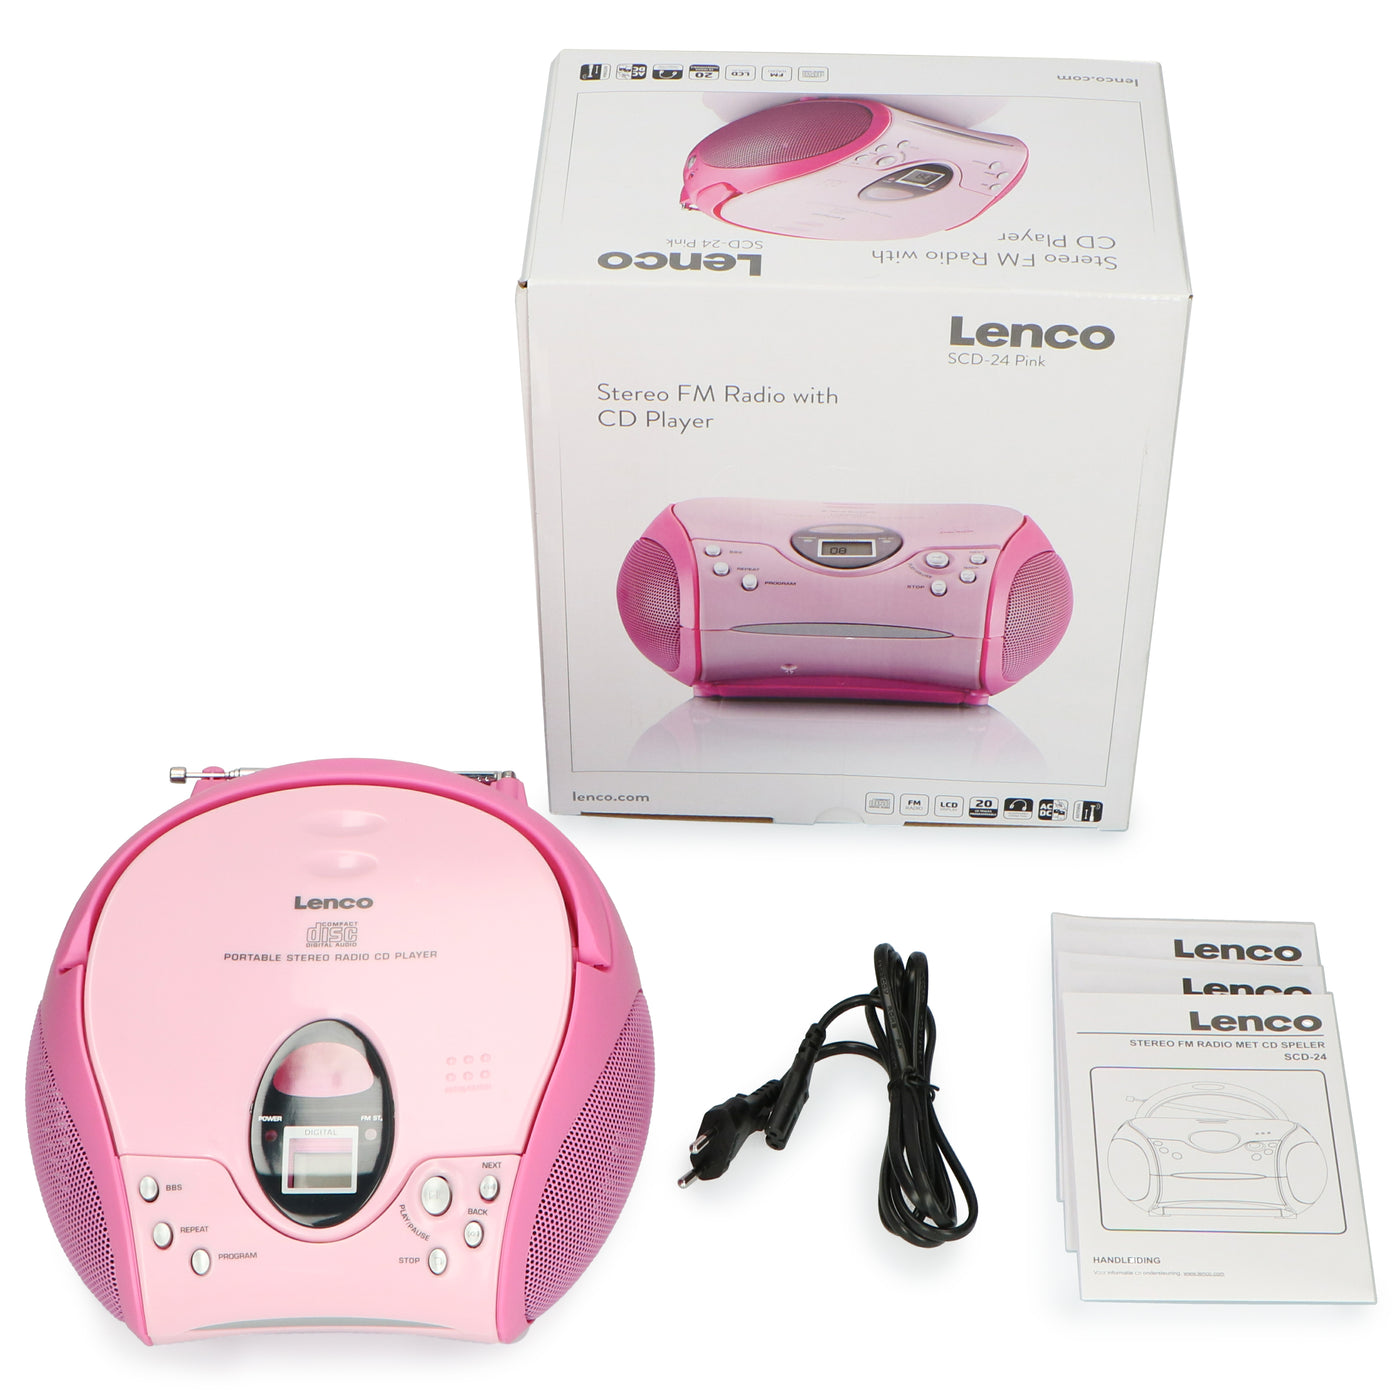 radio CD FM with -Catalog – Portable - SCD-24 Lenco player LENCO - Pink Pink stereo